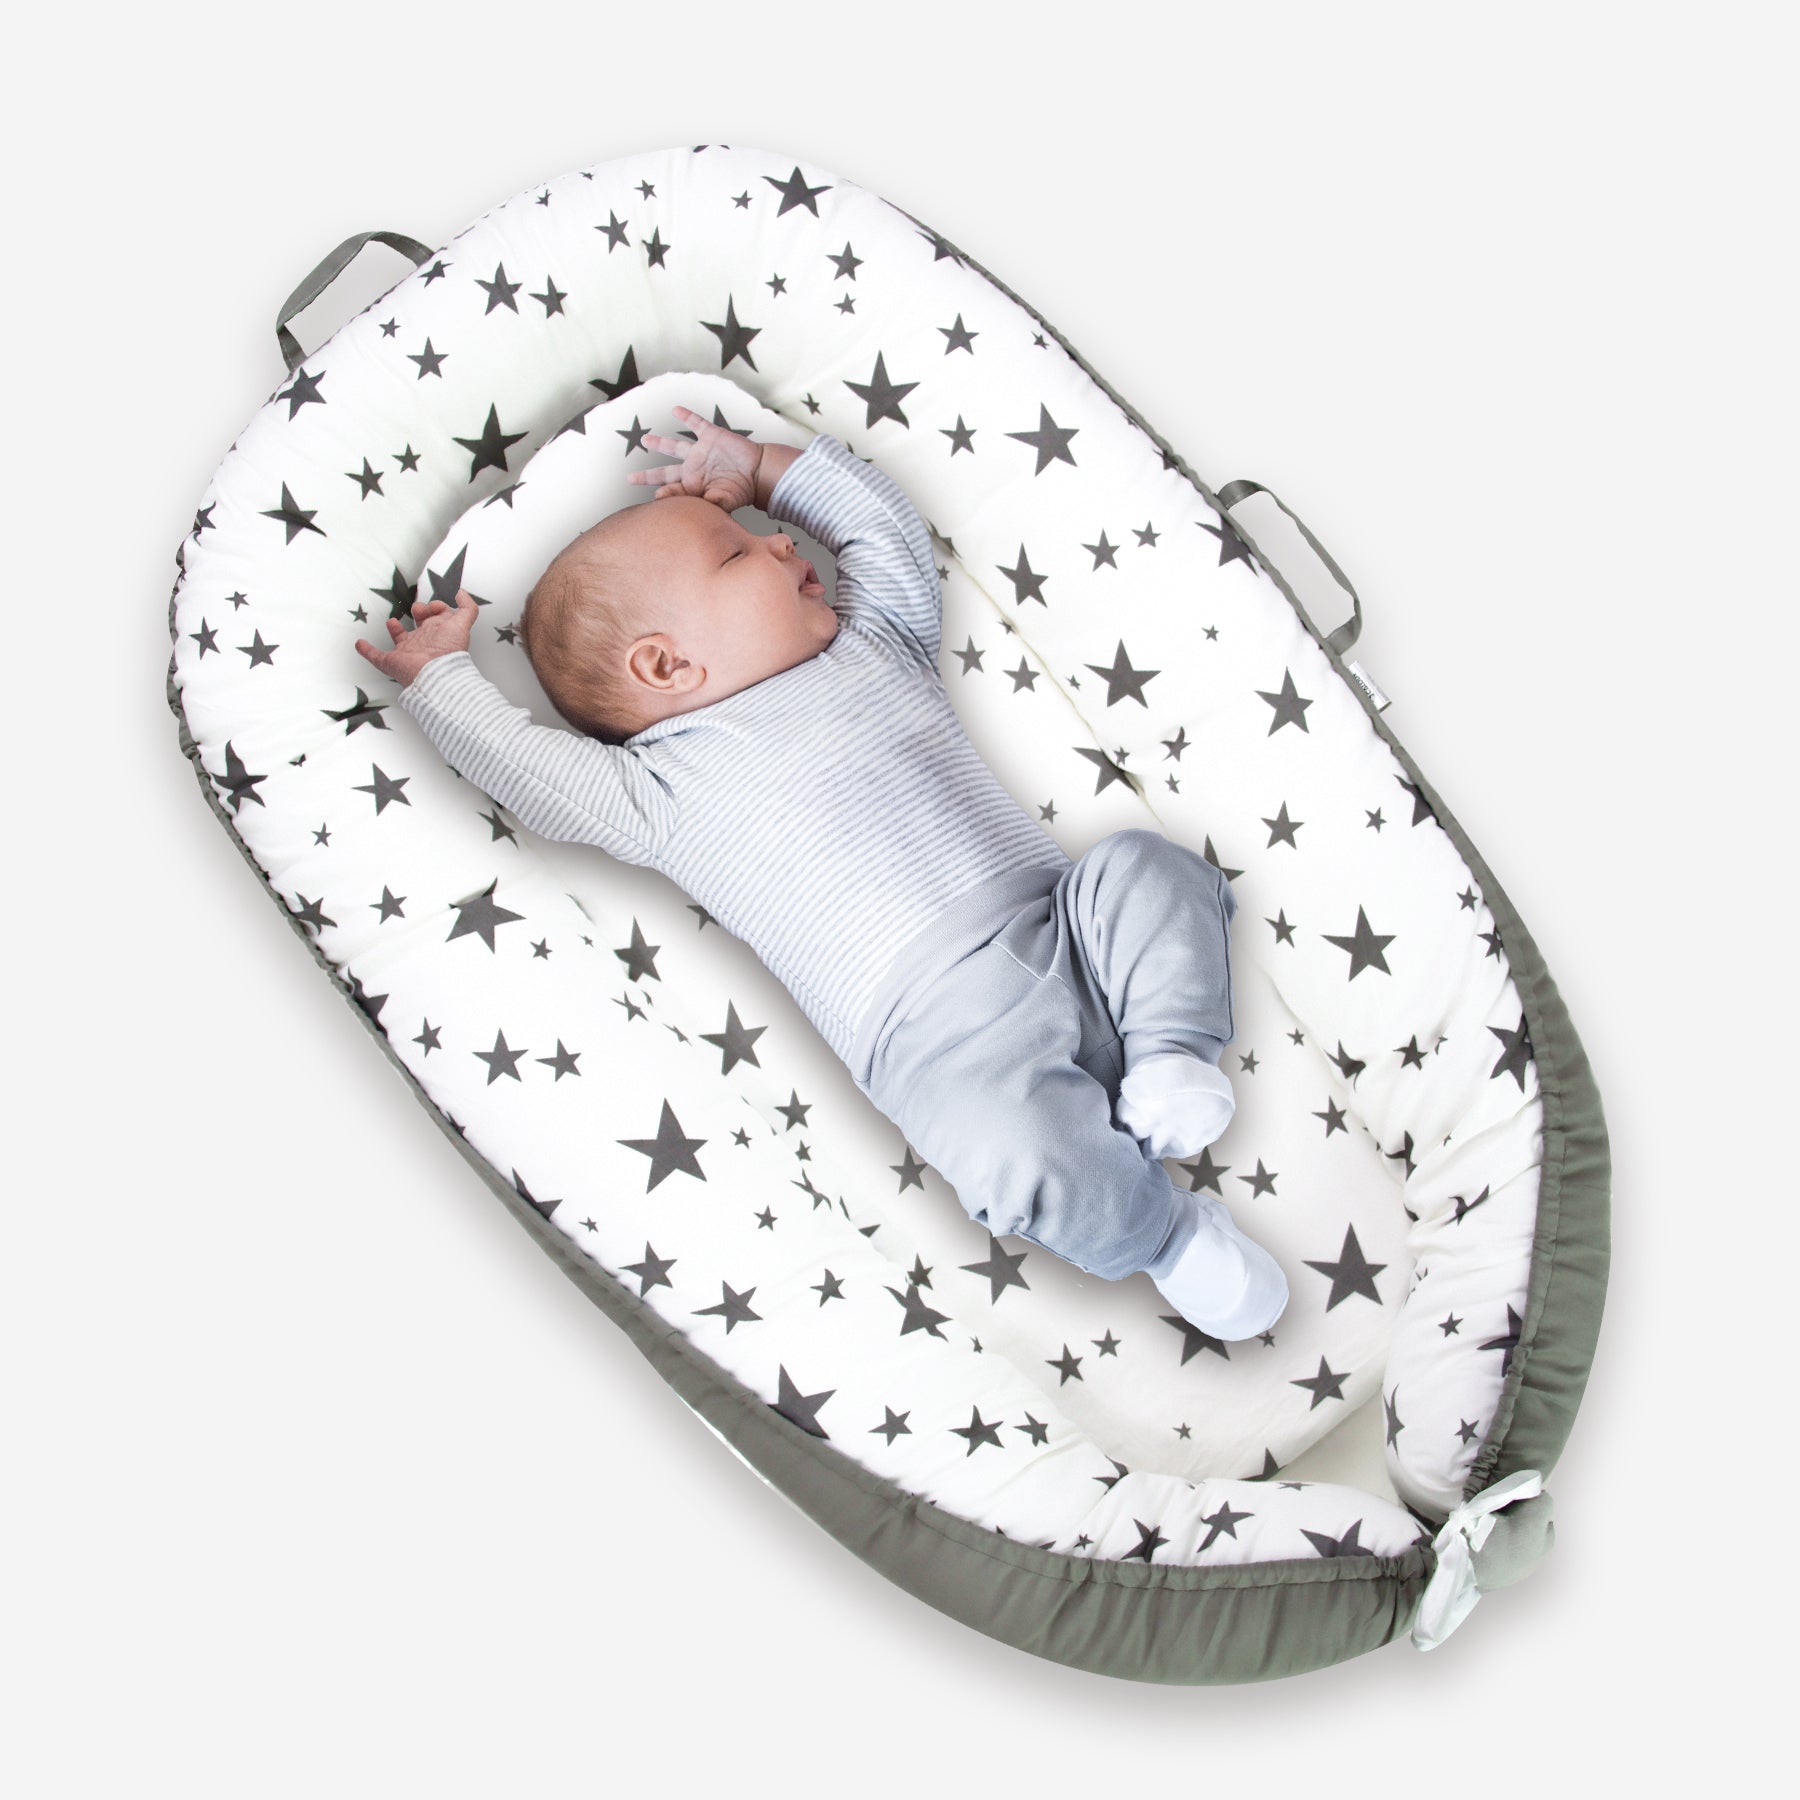 Baby Lounger Nest Baby Nest Newborn Portable Infant Sleeping Bed